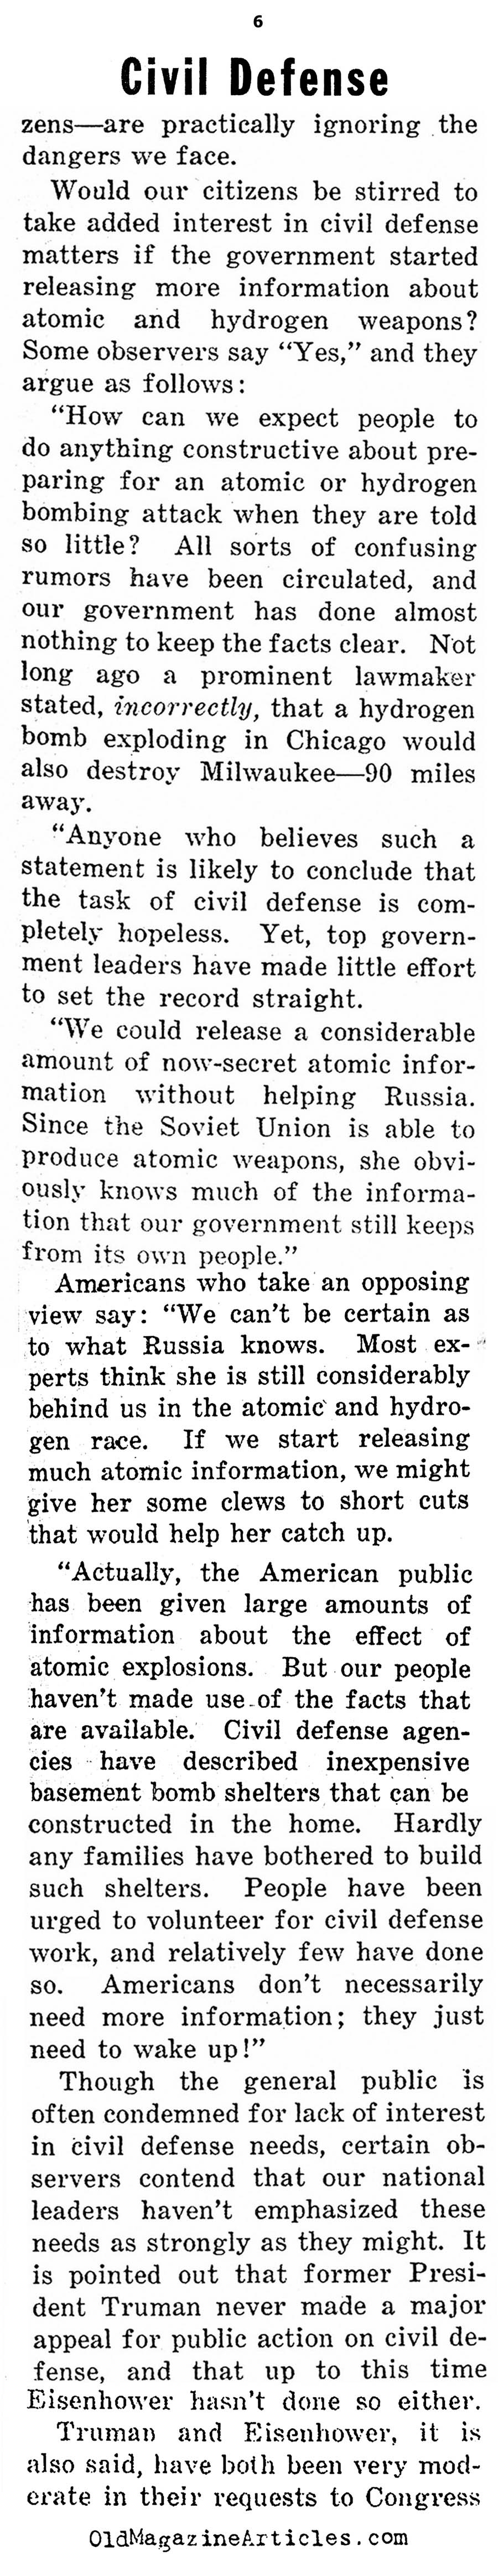 American Civil Defense (Weekly News Review, 1953)